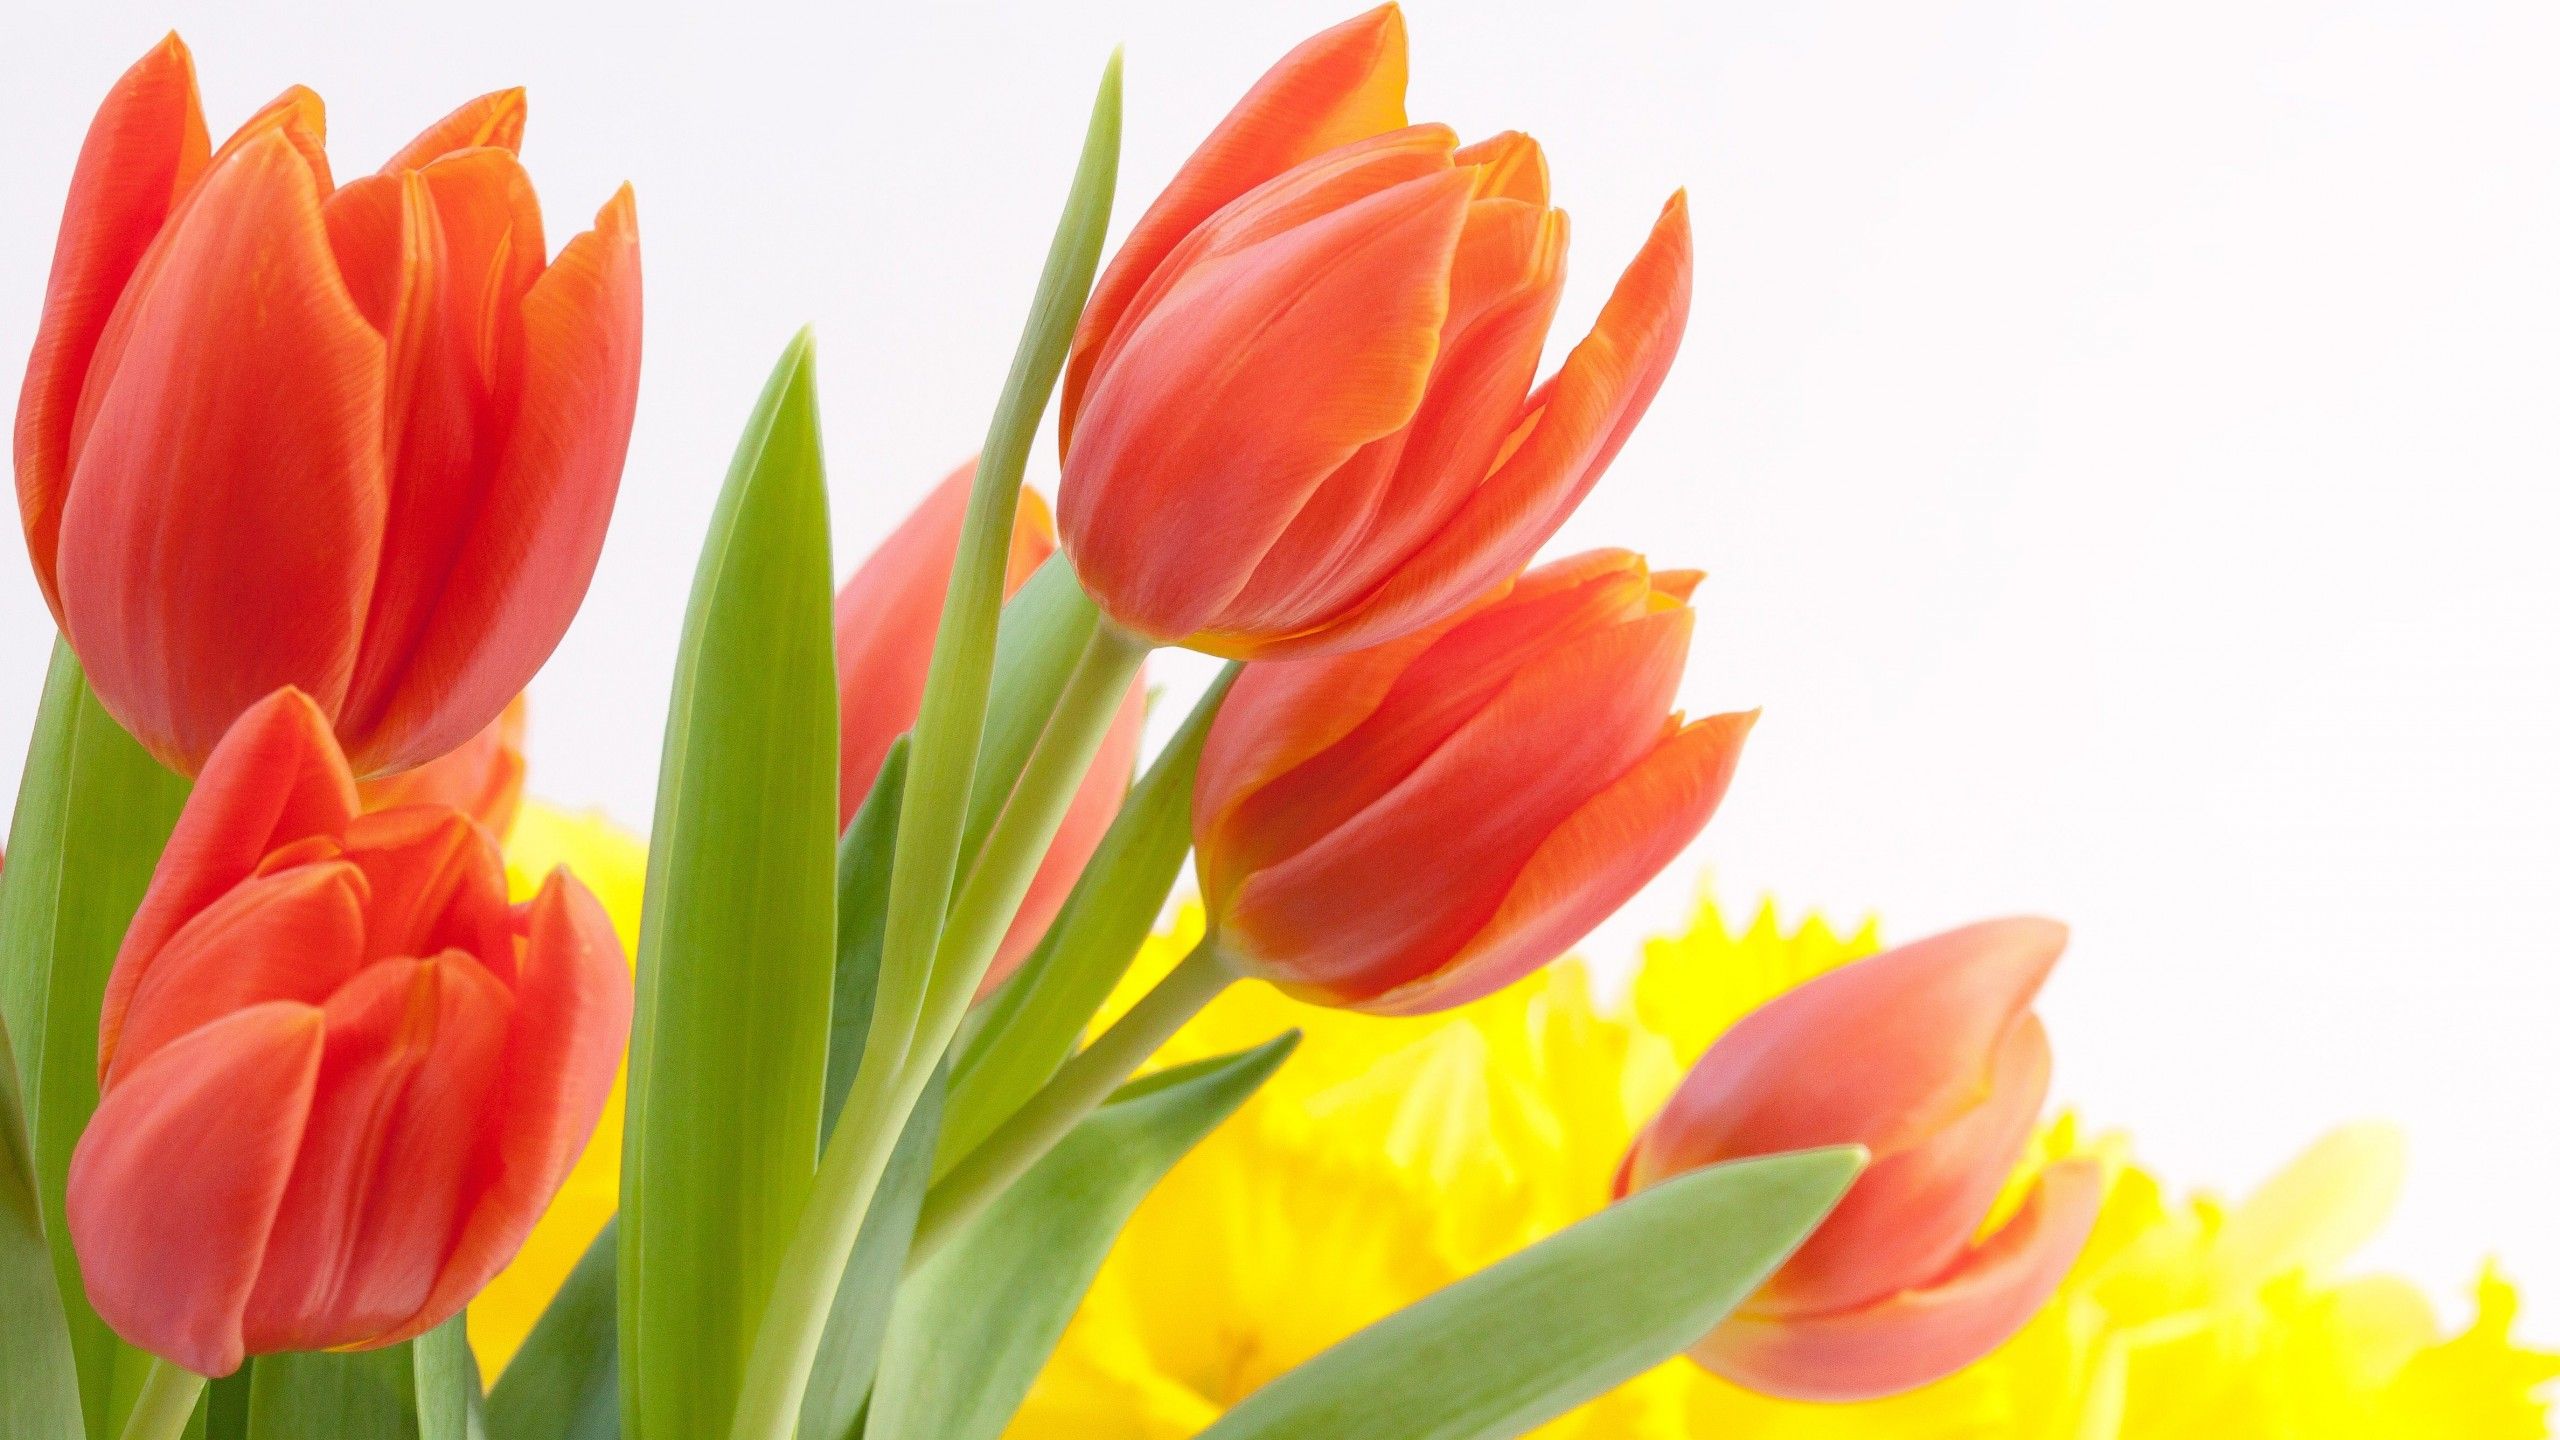 Tulip Flowers HD Wallpaper free download 2560x1440